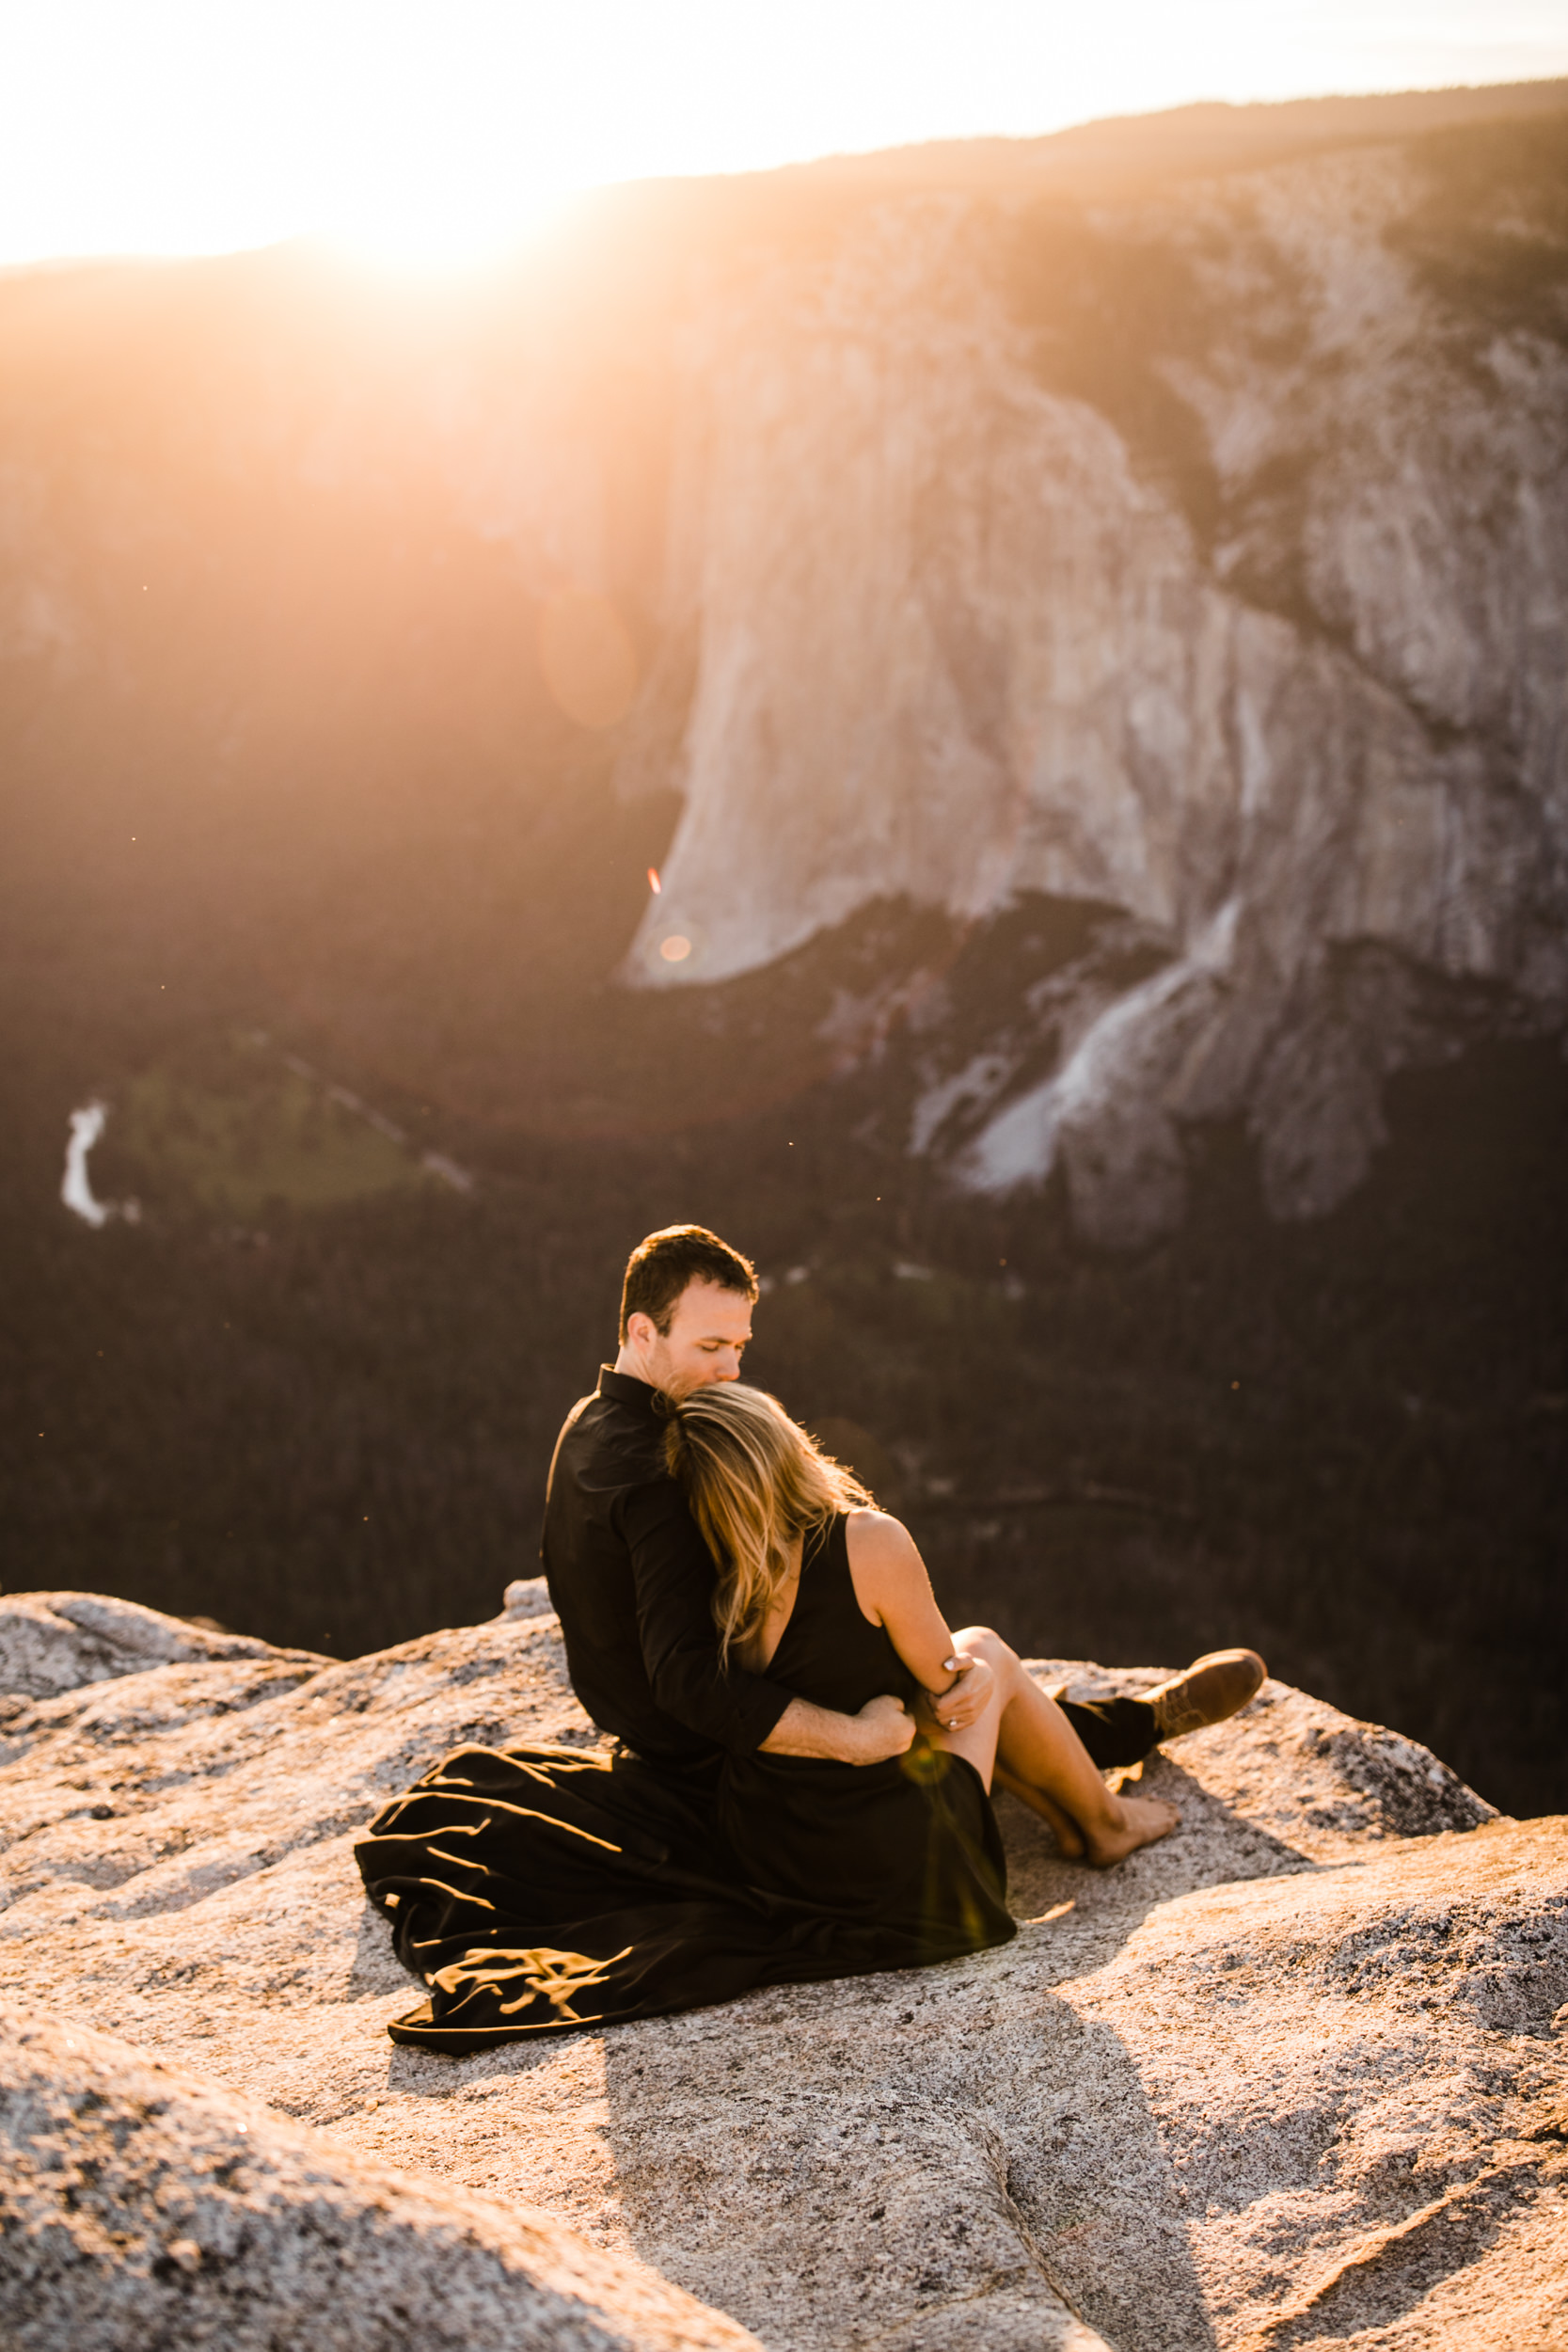 alexandra + david's destination engagement session in the mountains | yosemite elopement inspiration | taft point engagement photos | yosemite national park wedding photographer